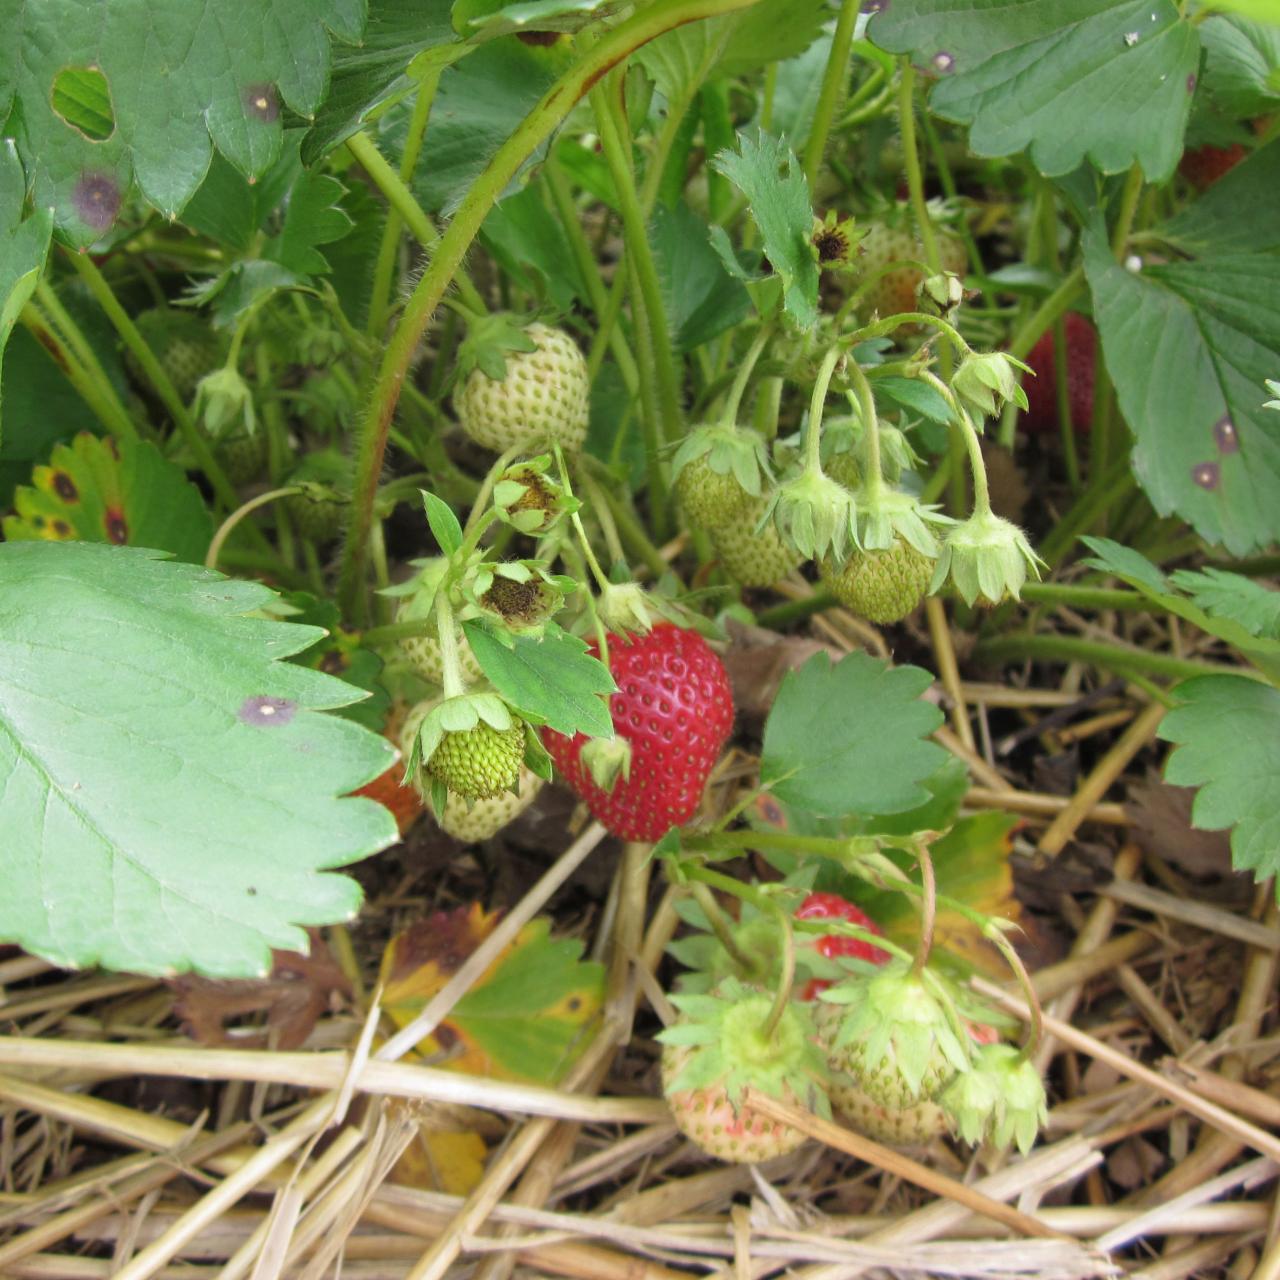 How to Winterize Strawberry Plants